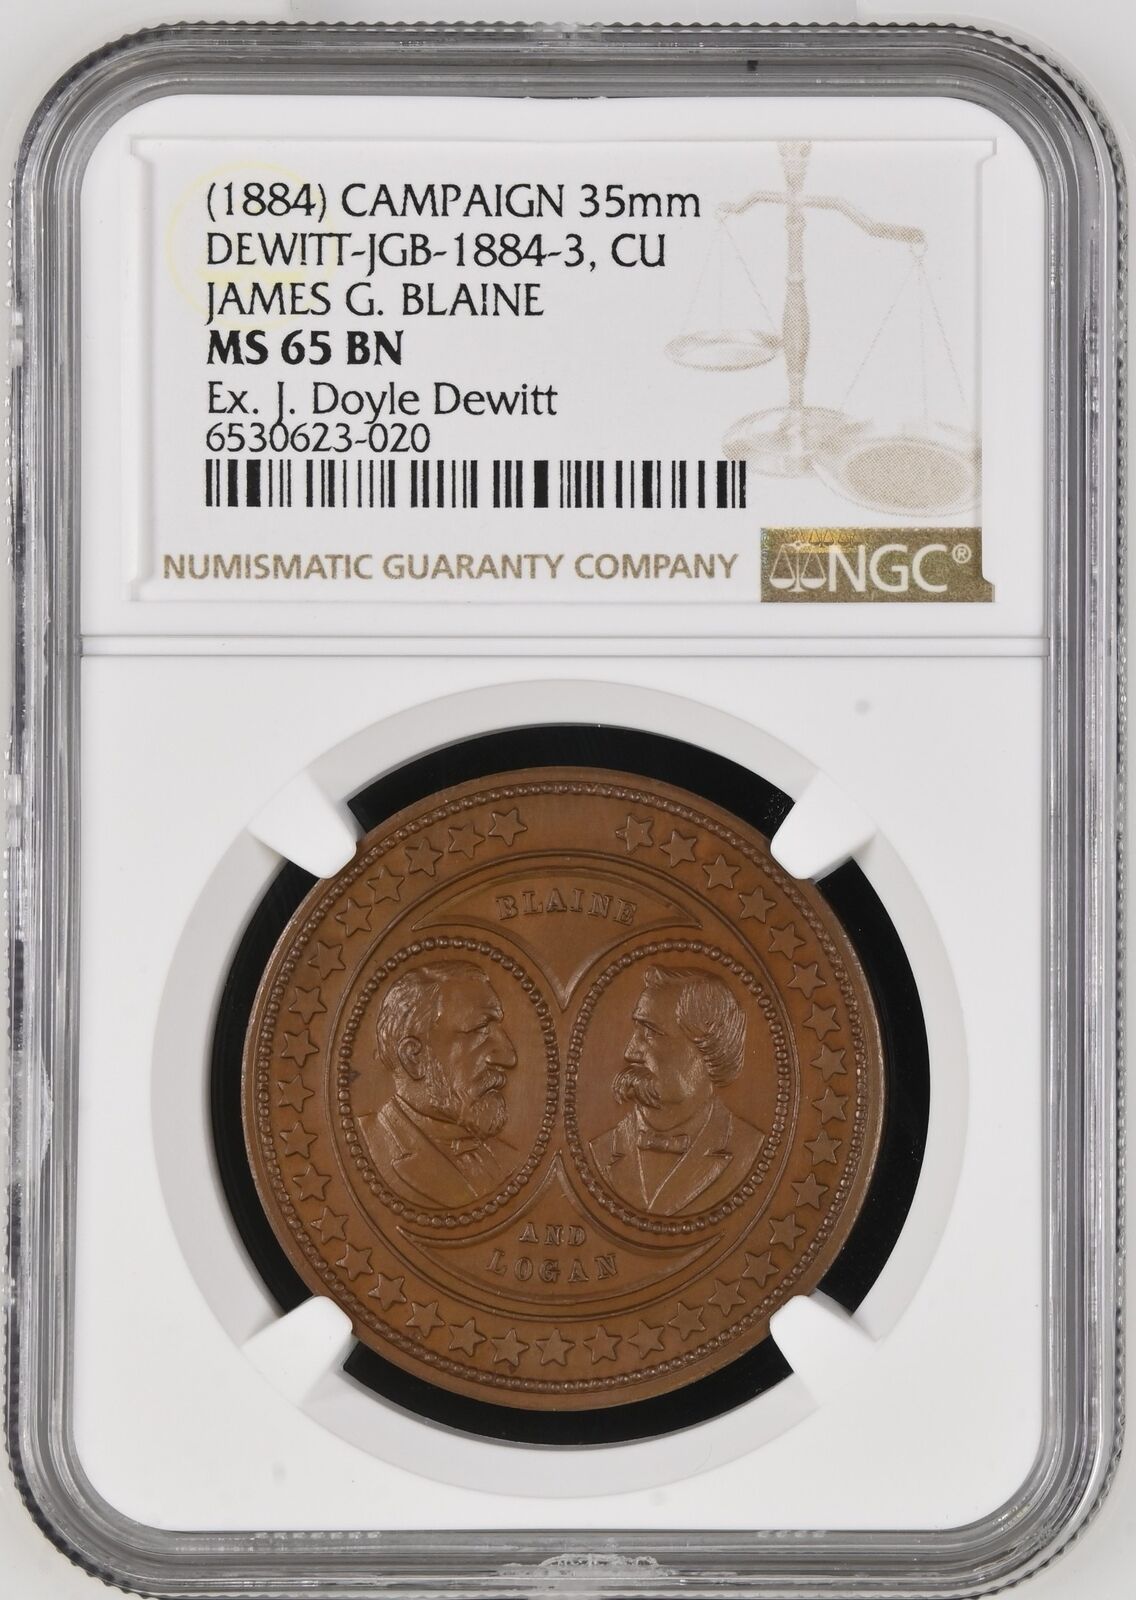 RARE 1884 James G. Blaine NGC MS65 JGB-1884-3 COPPER Campaign Medal Ex. Dewitt